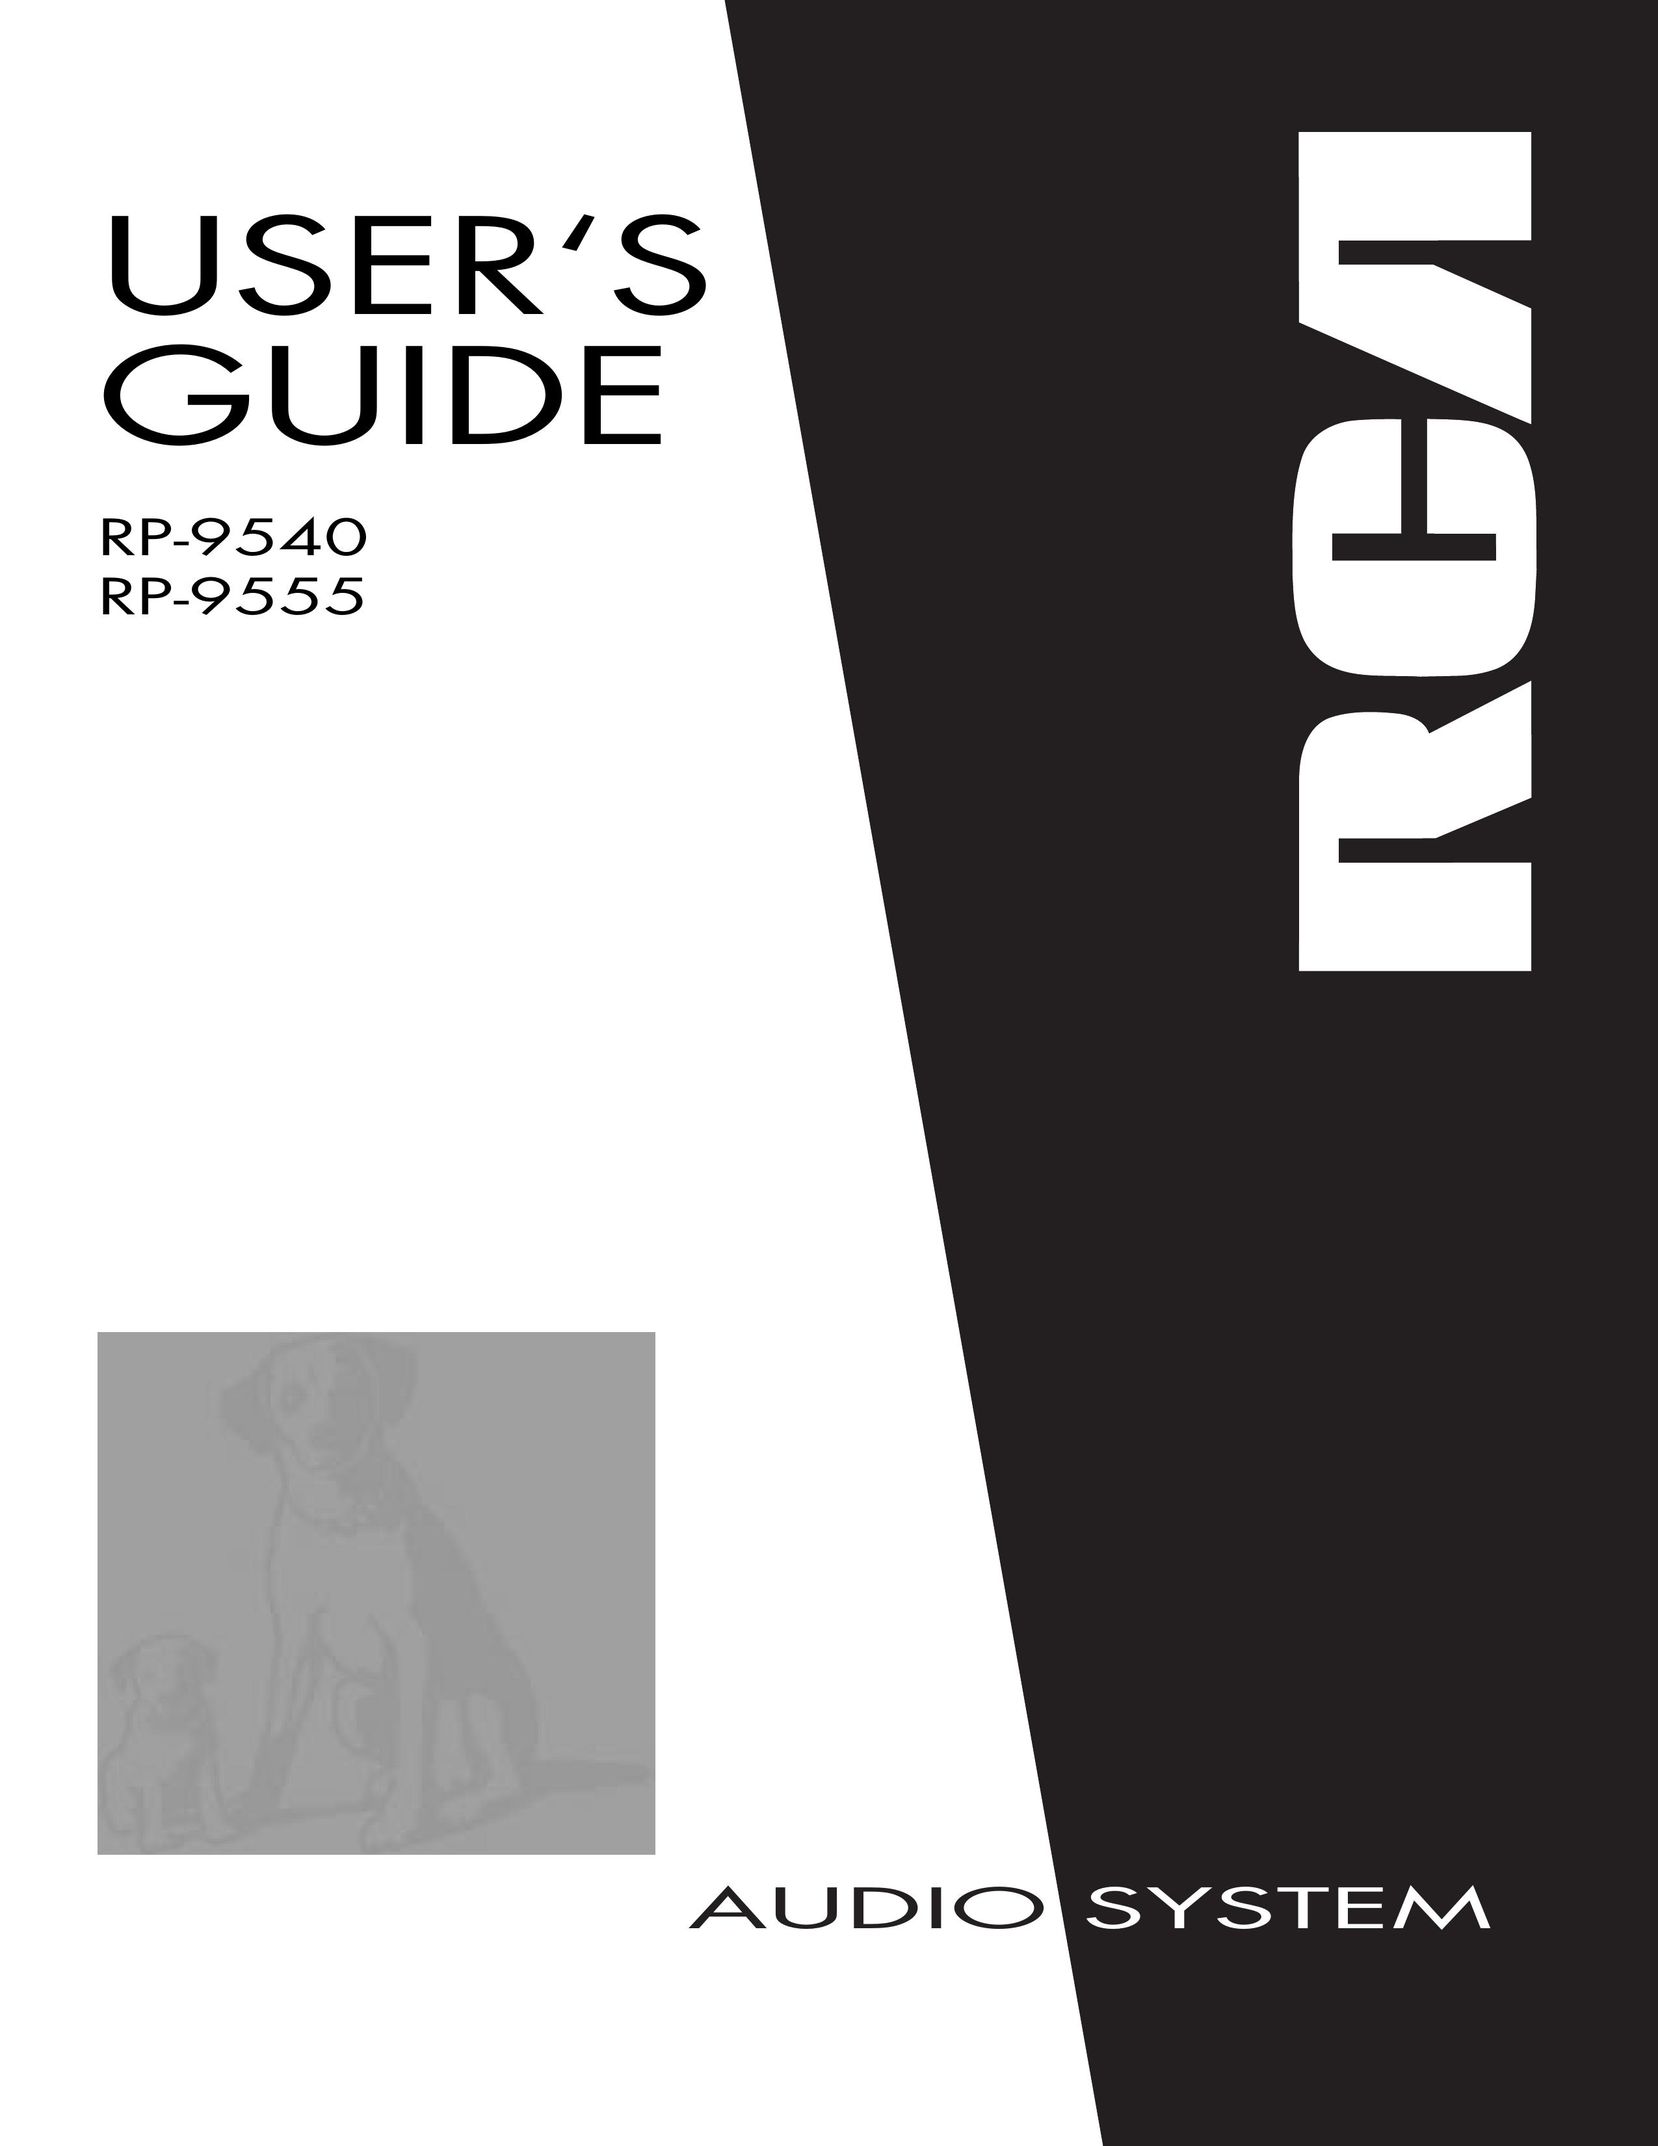 RCA RP-9555 Portable CD Player User Manual